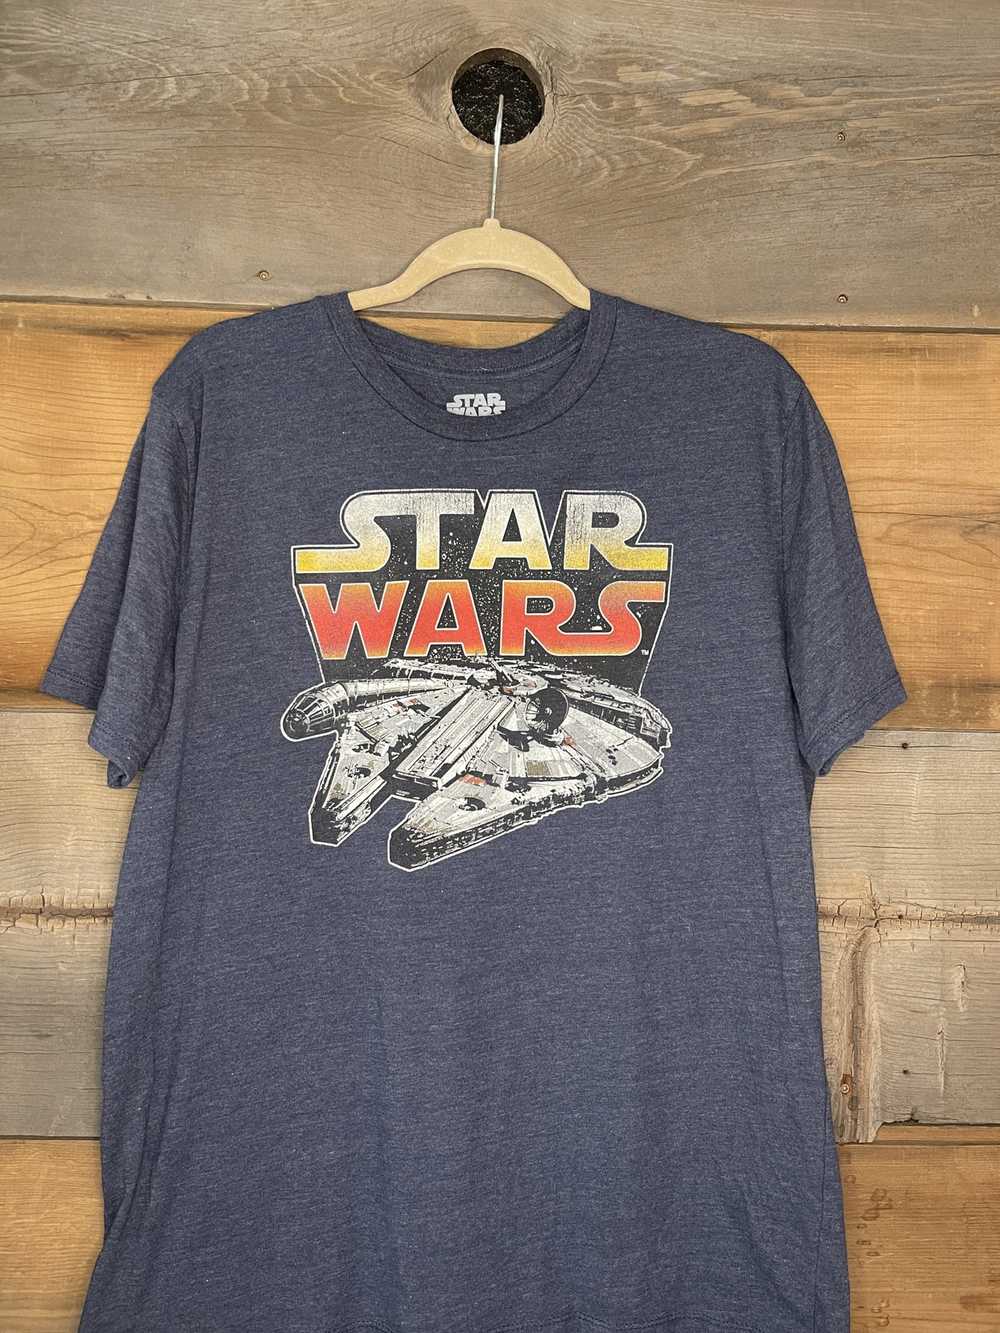 Star Wars Star wars t shirt - image 1